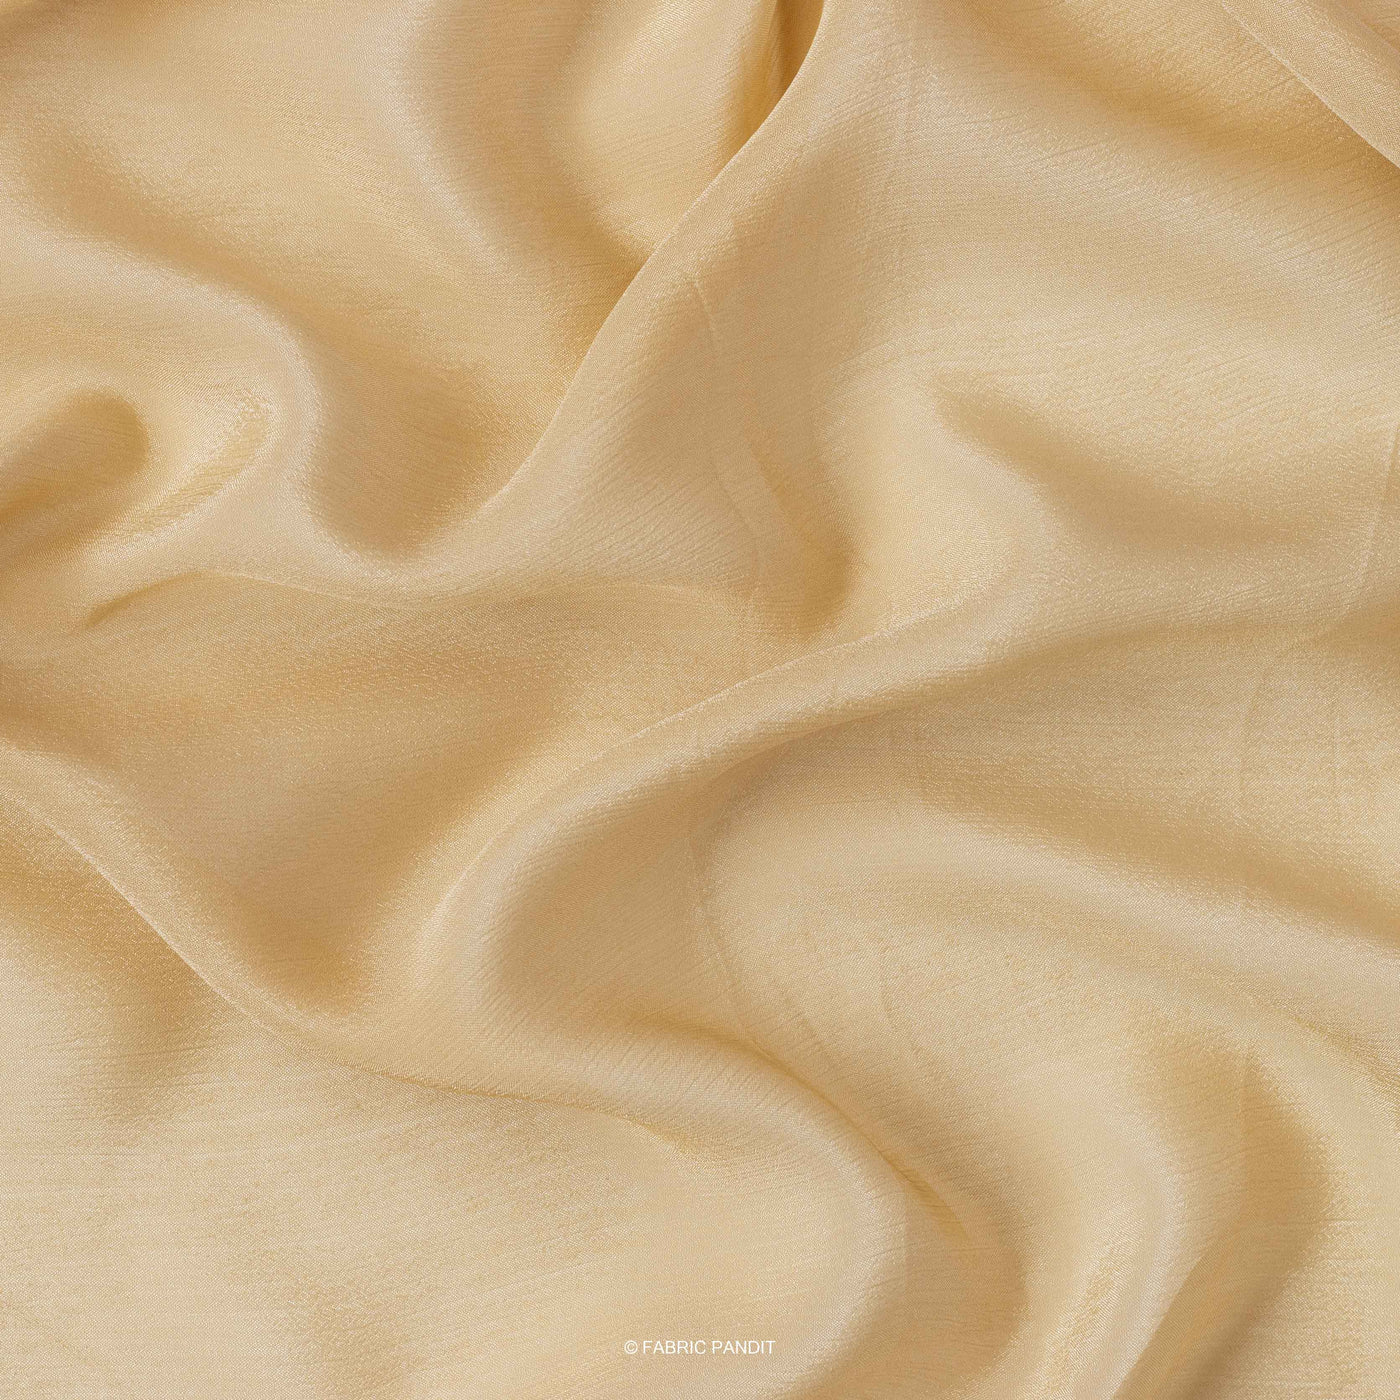 Fabric Pandit Fabric Light Brown Plain Pure Viscose Chinnon Chiffon Fabric (Width 45 Inches)